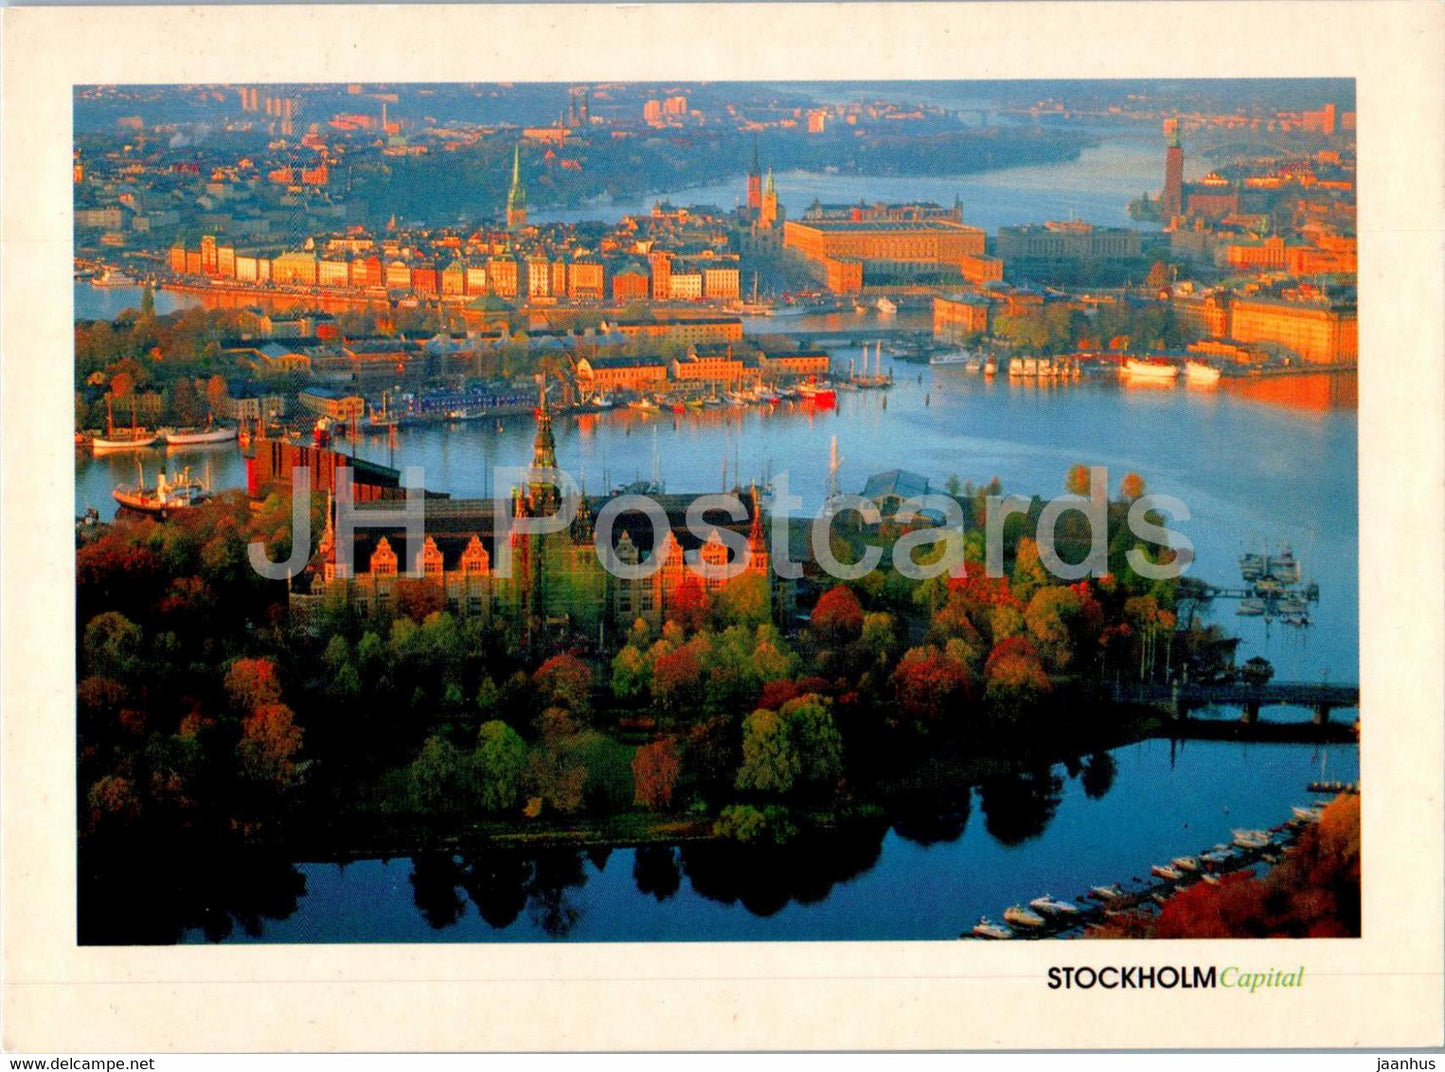 Stockholm Capital - Gryning over Stockholm - dawn - Sweden - unused - JH Postcards